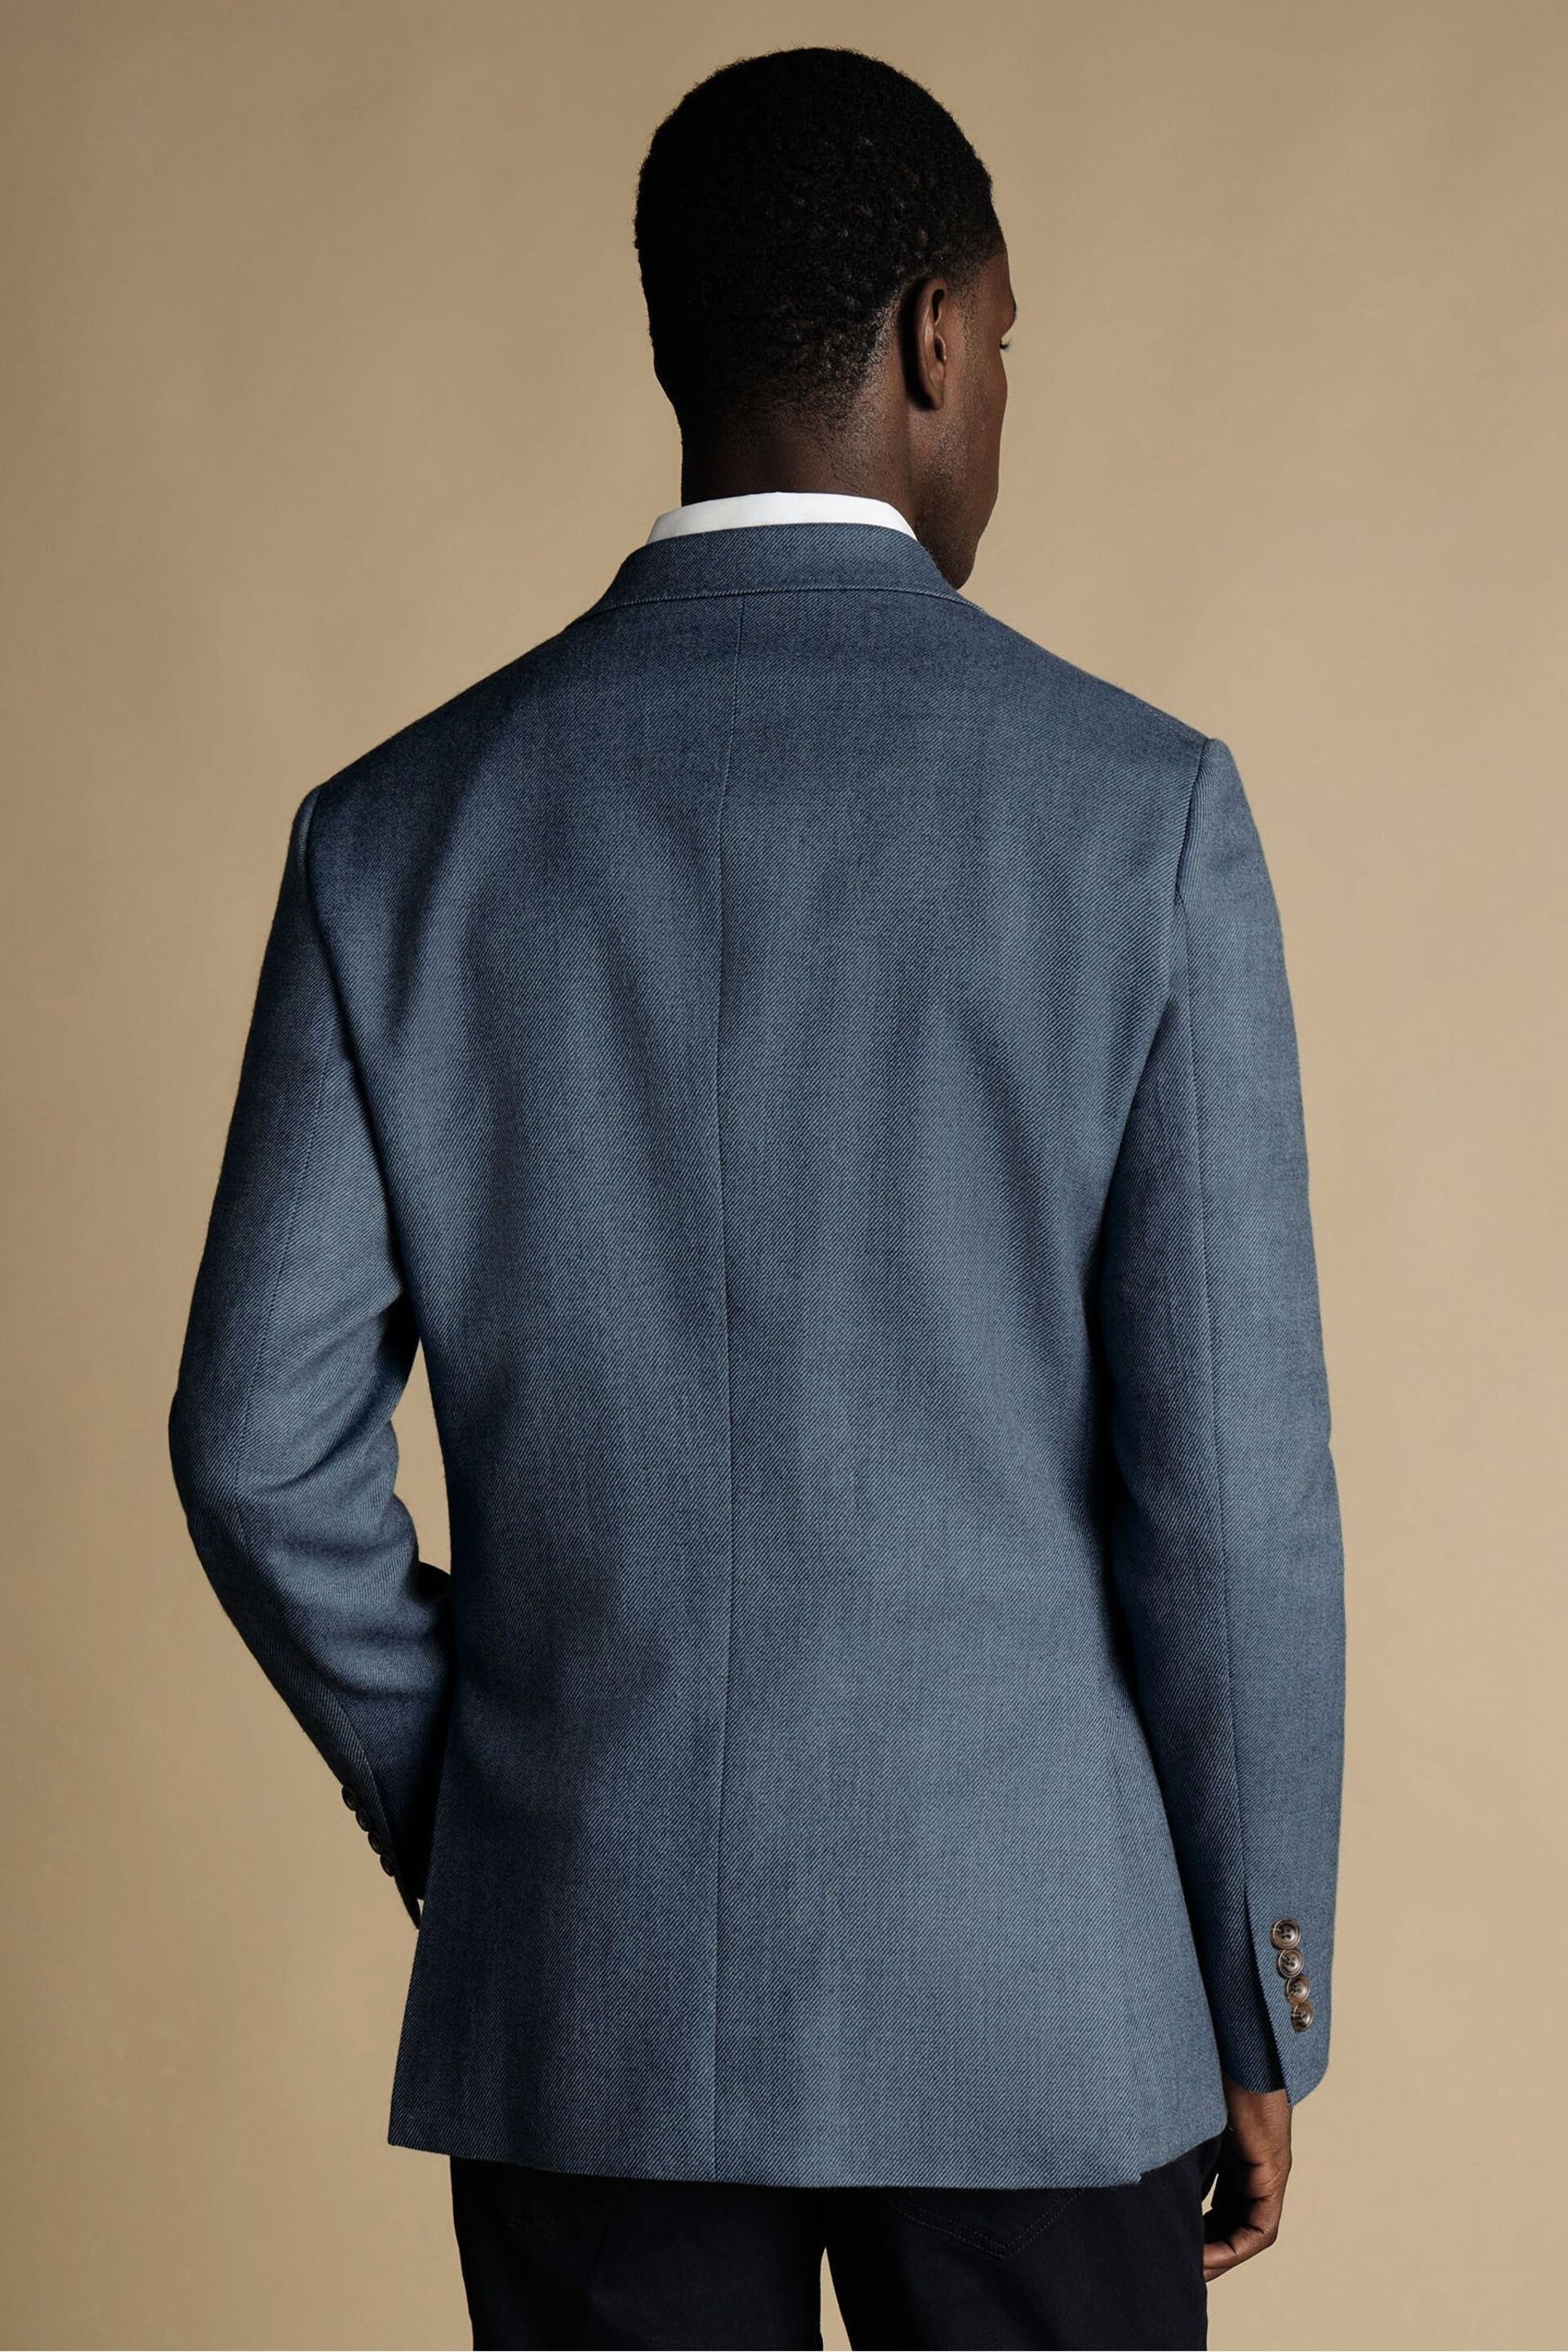 Charles Tyrwhitt Blue Ground Twill Wool Texture Slim Fit Jacket - Image 2 of 5